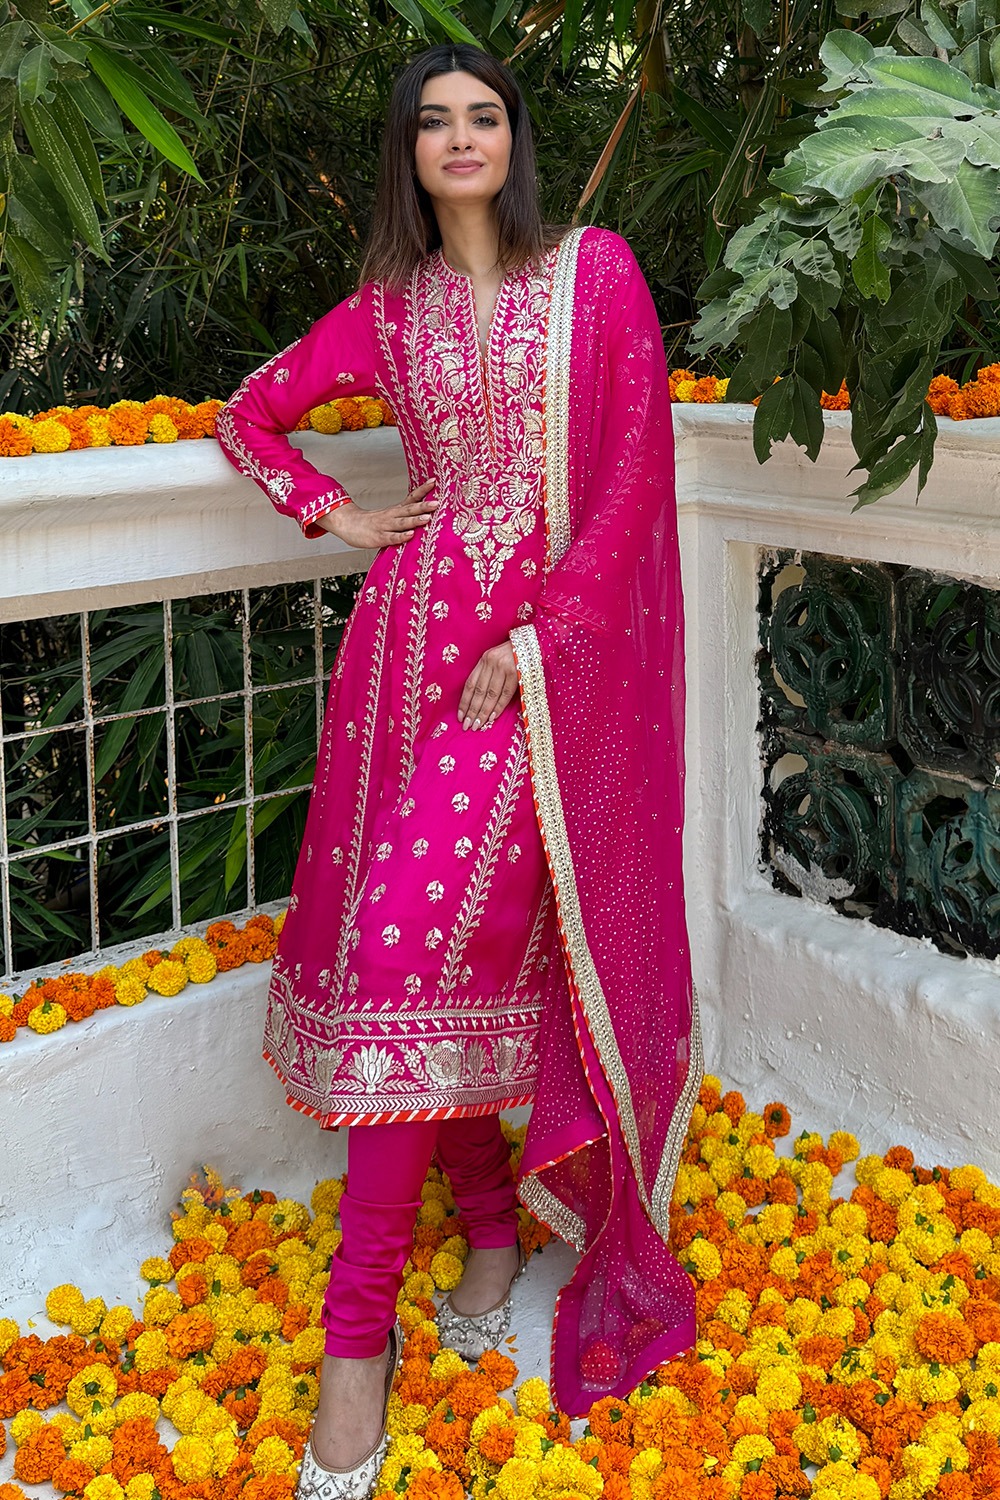 Diana Penty in Golconda Aarohi Anarkali set